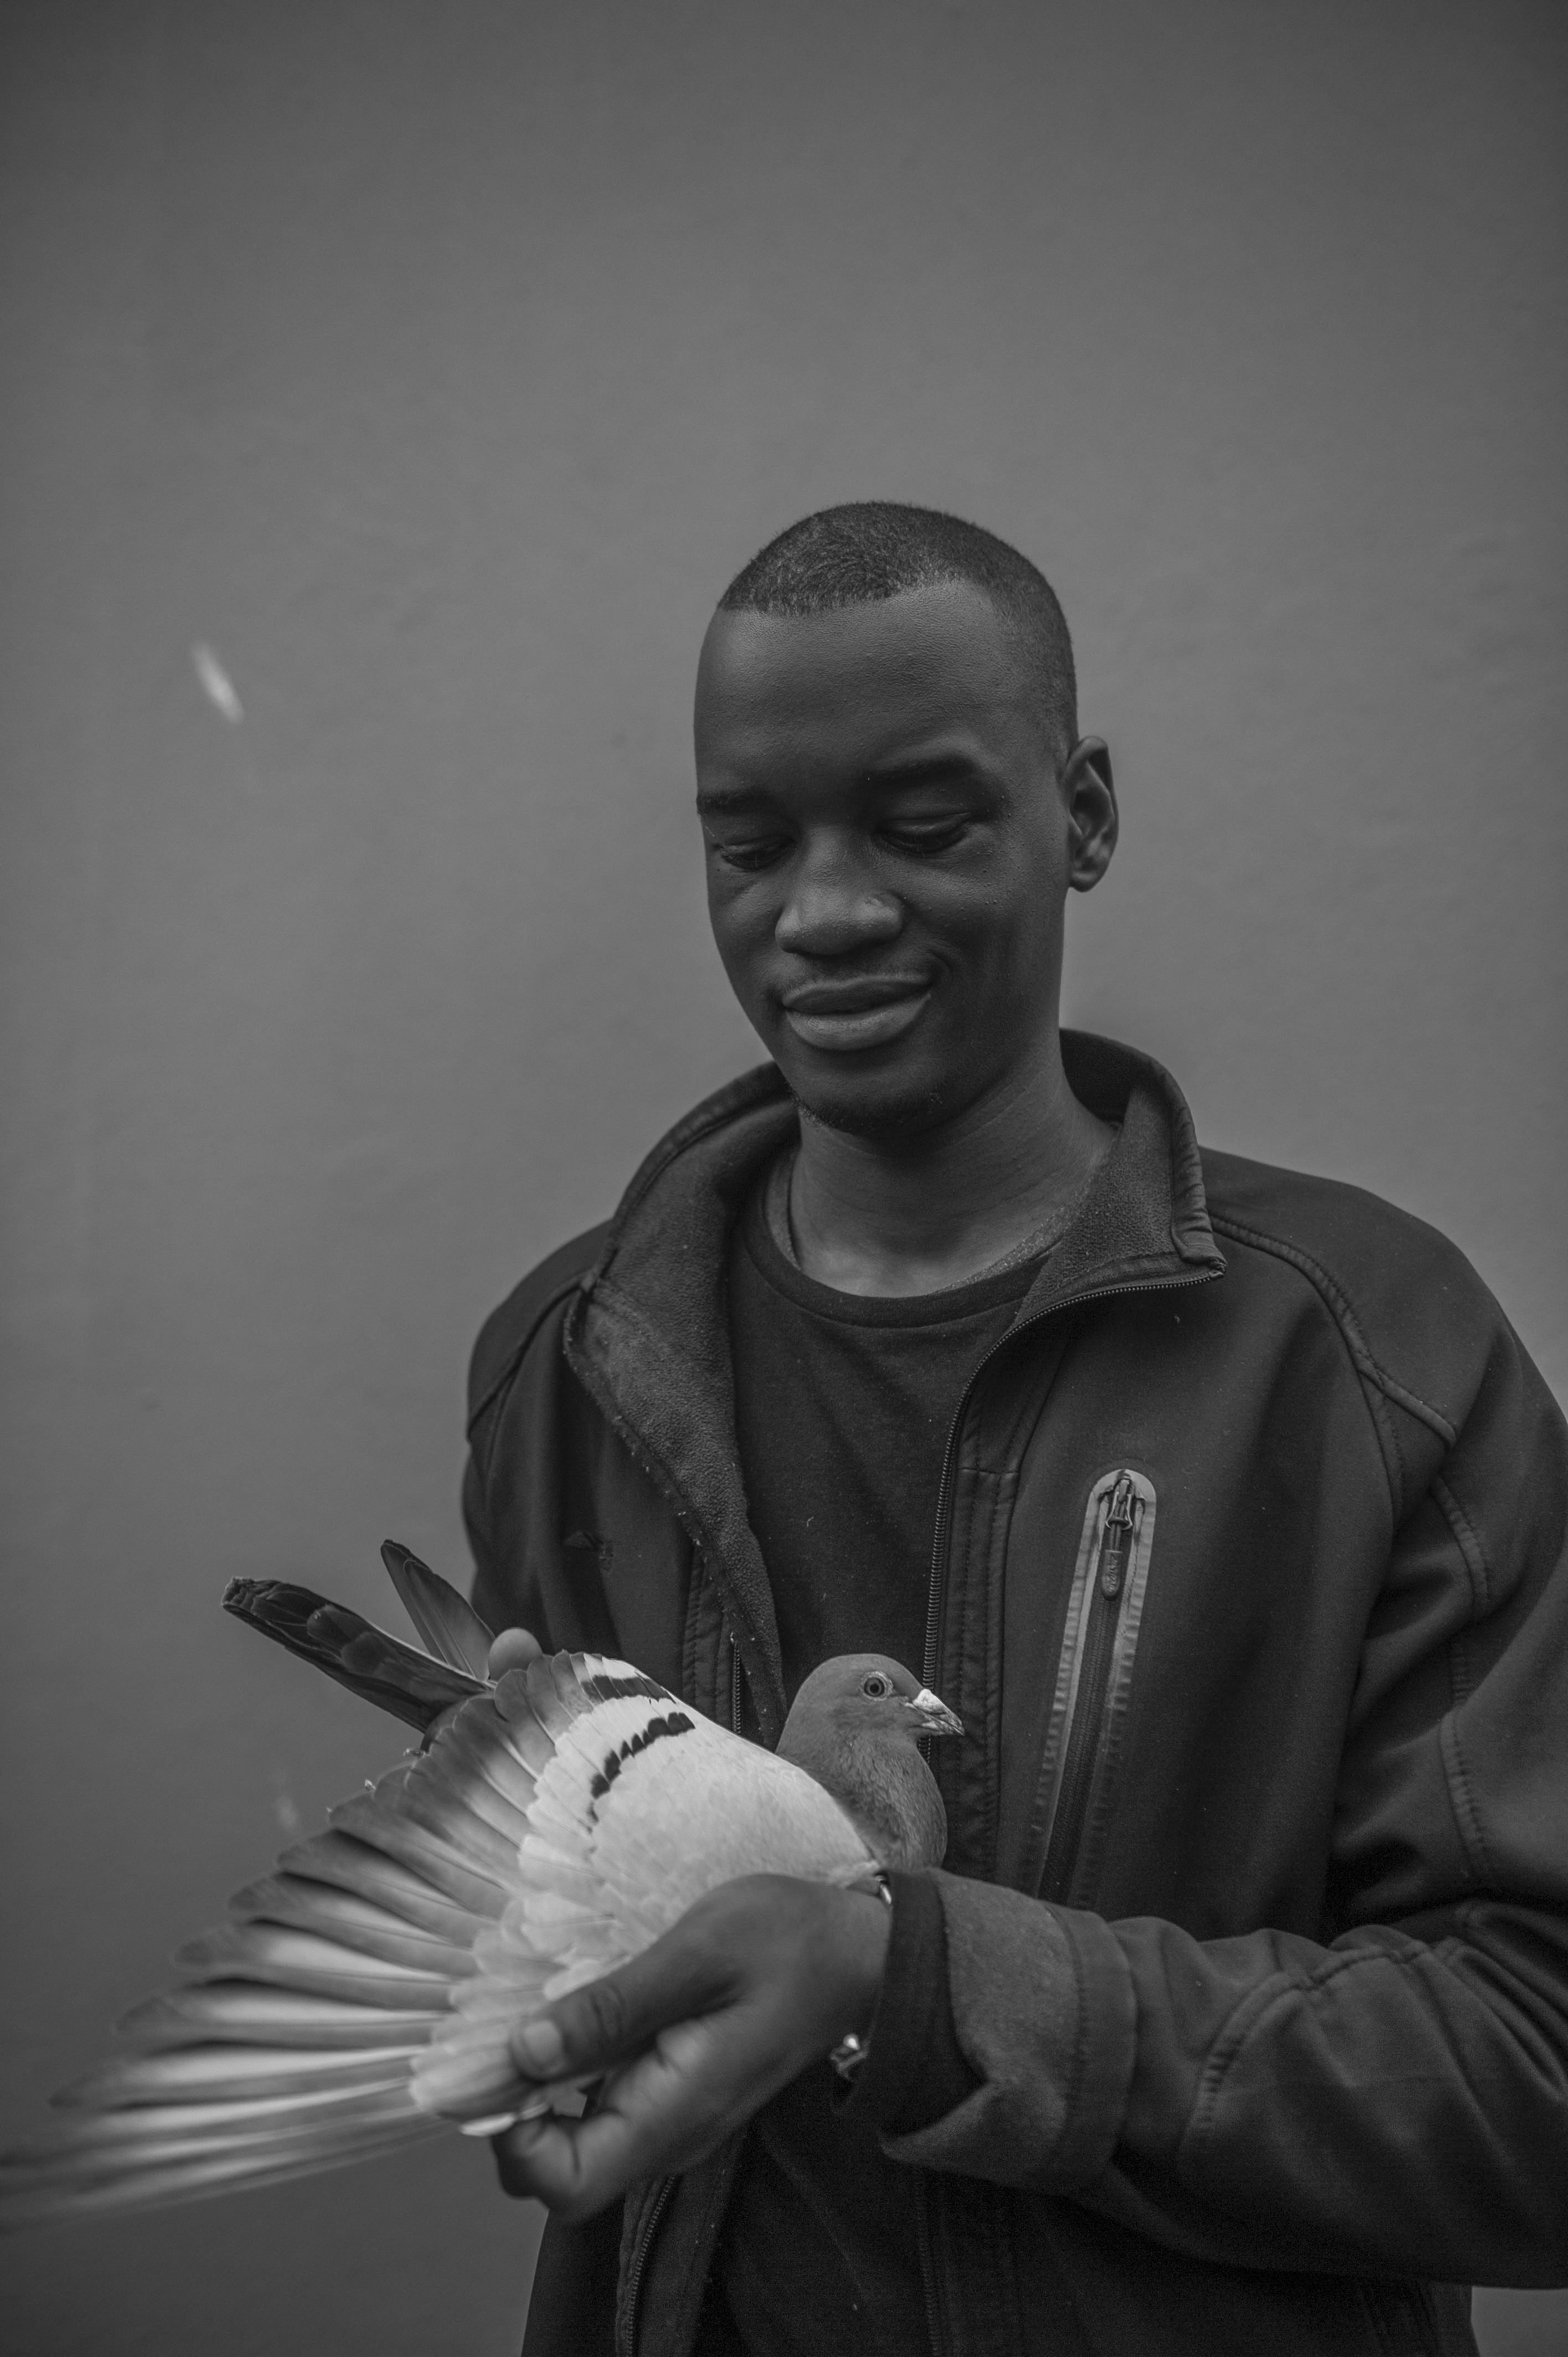 Pigeon fancier and founder of Pigeon Racing Academy Community lofts, Lodumo Nkala